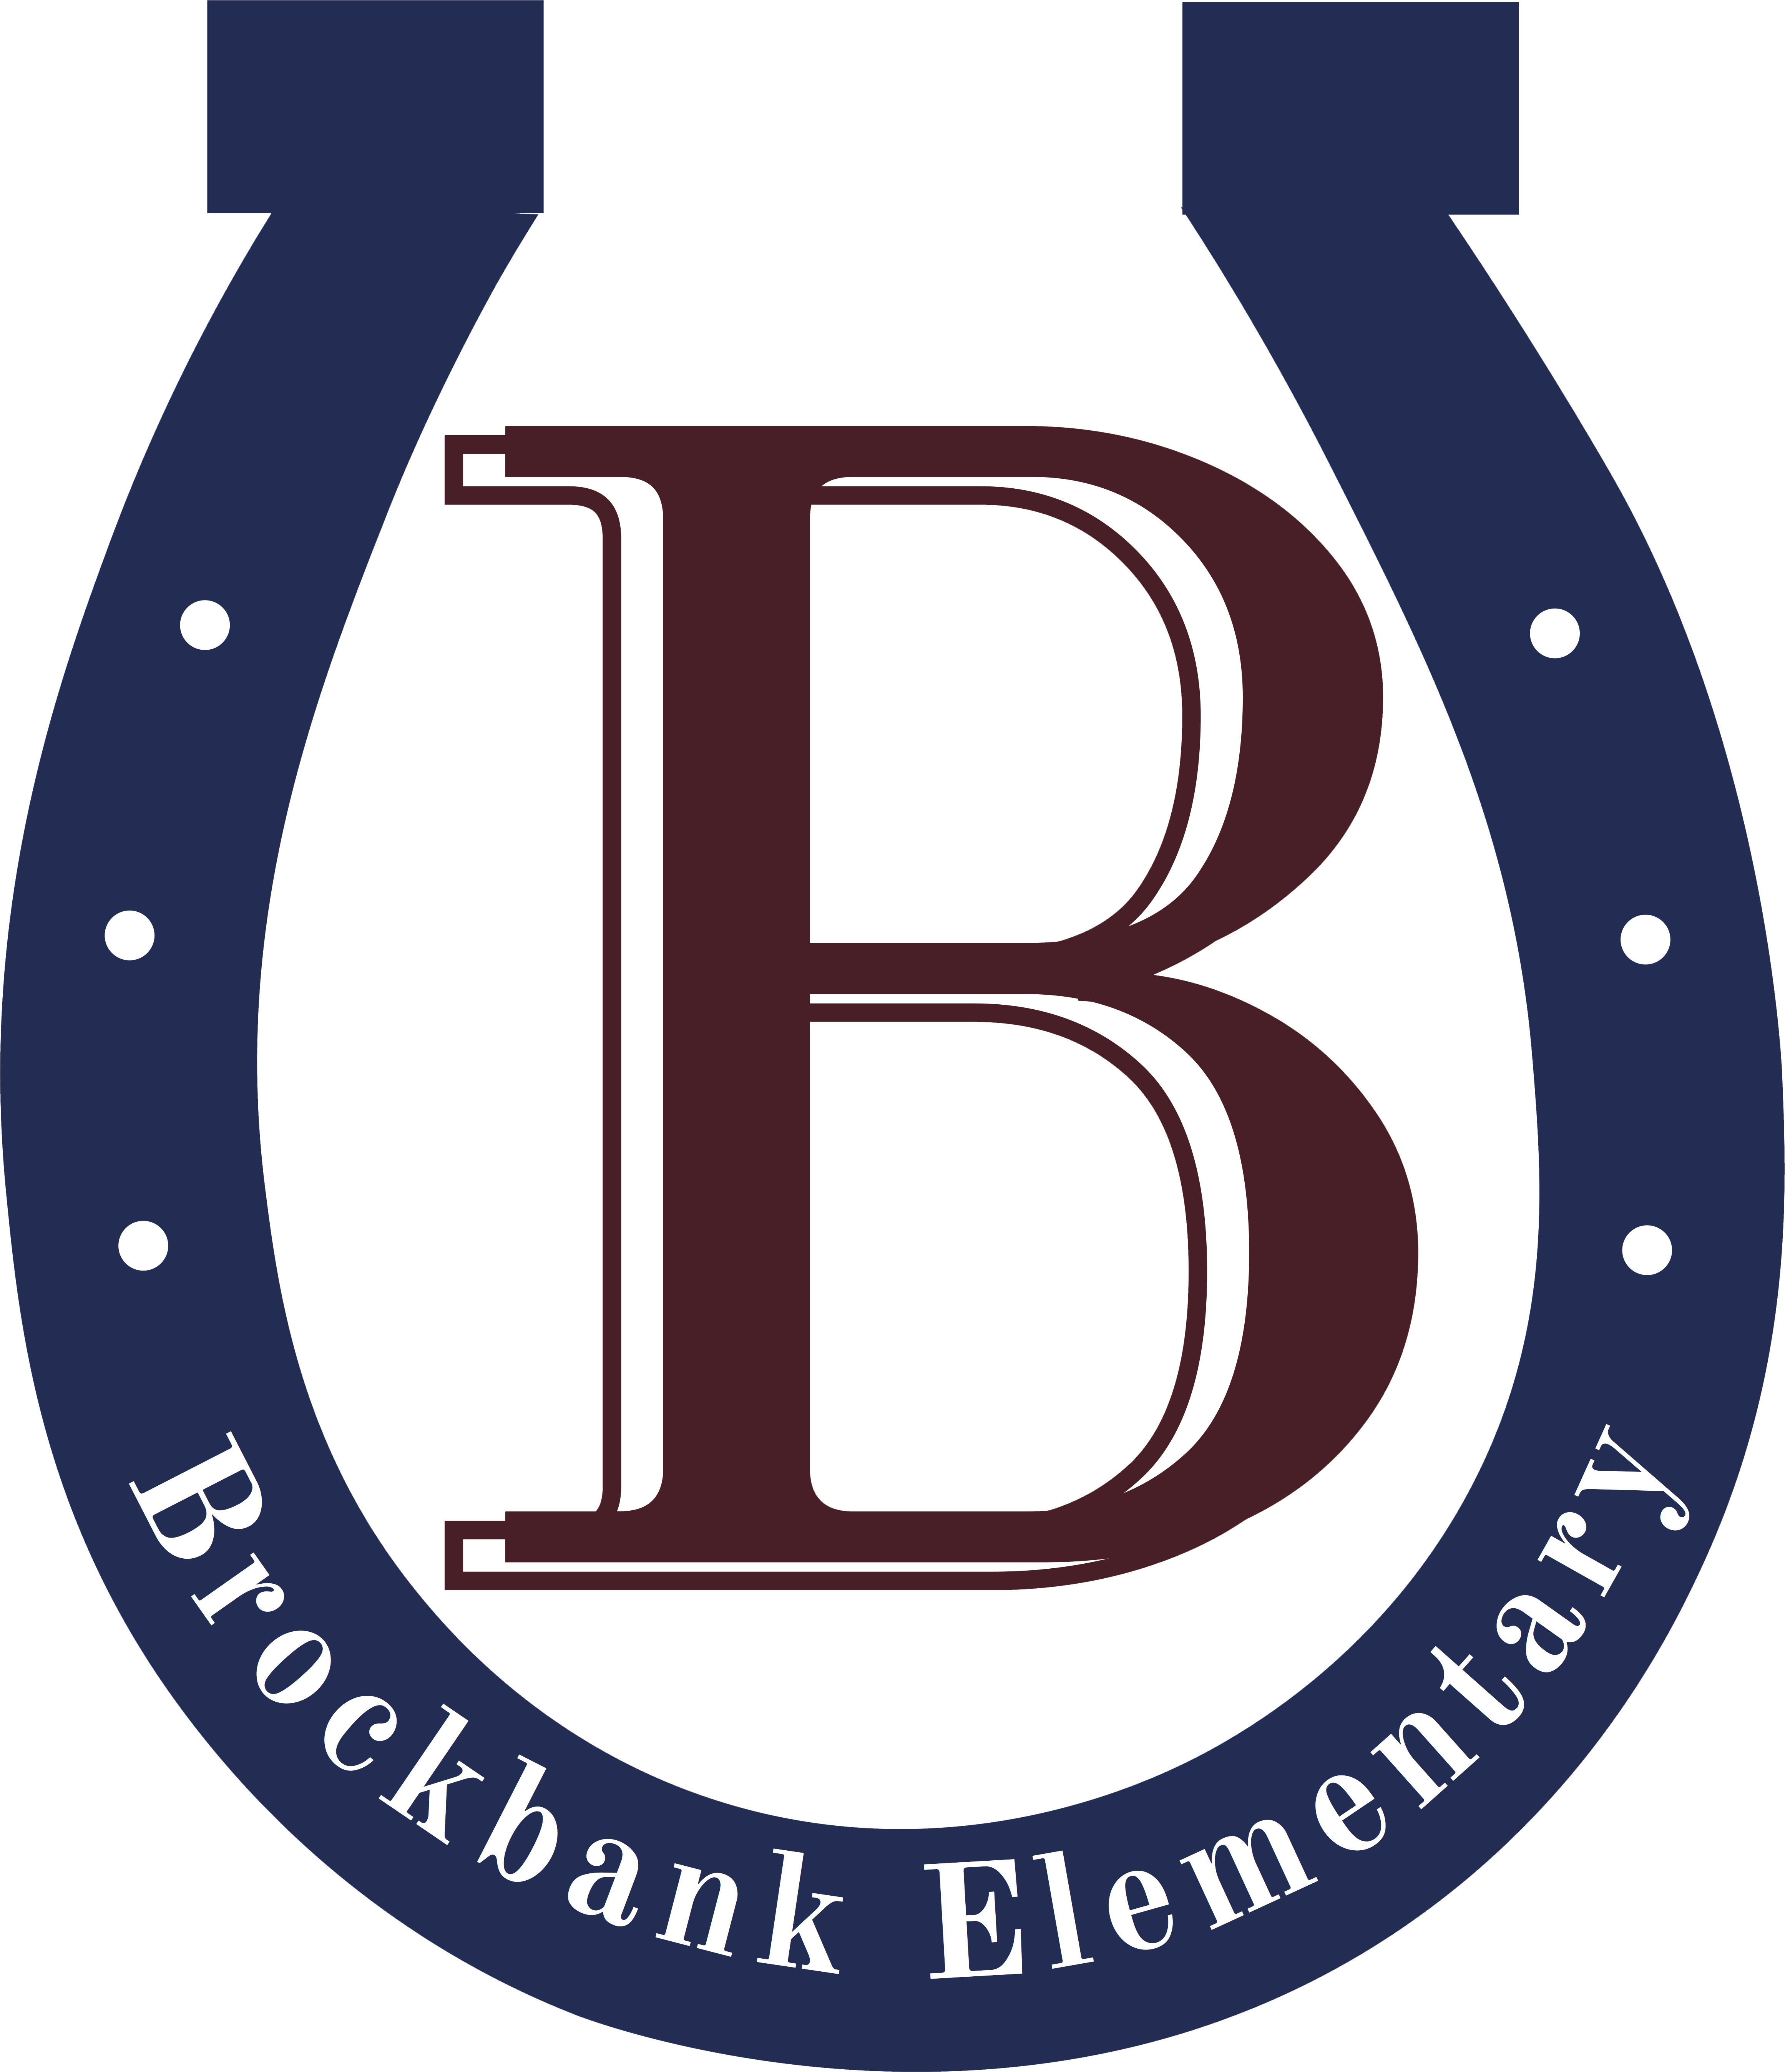 Home - Brockbank Elementary School (4645x5393)